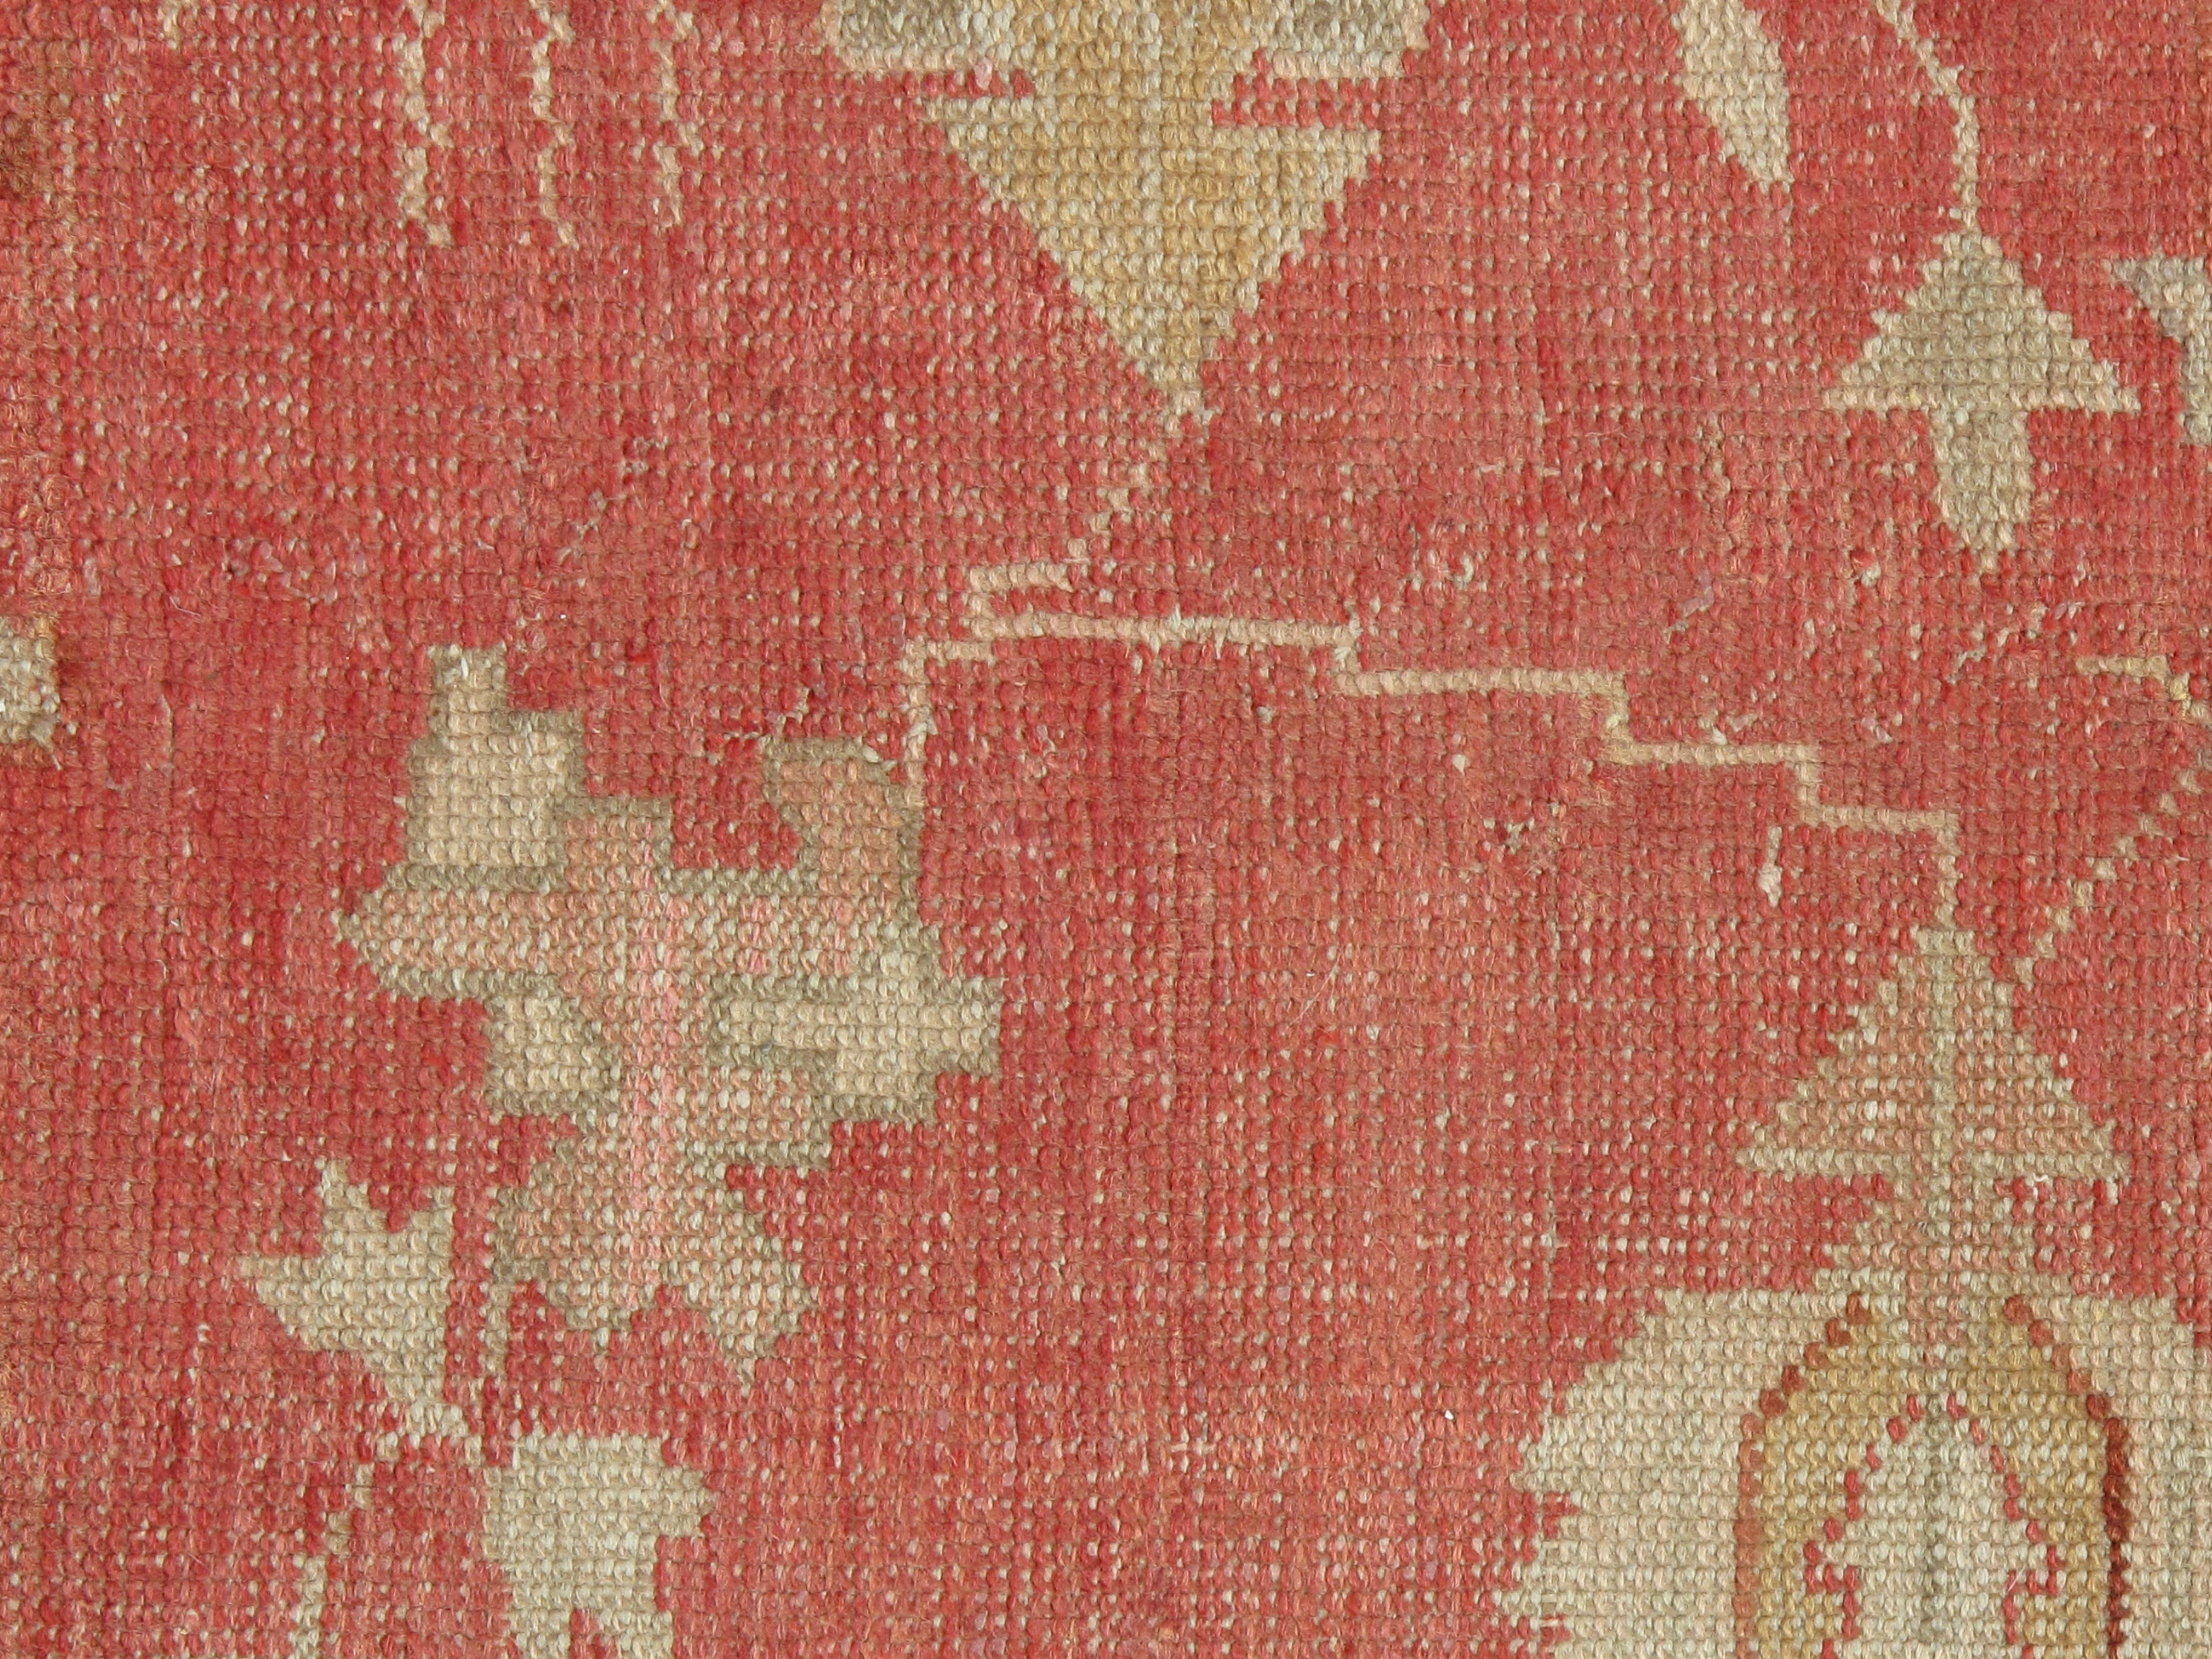 Wool Antique Oushak Carpet, Handmade Turkish Oriental Rug, Beige, Coral, Soft Colors For Sale